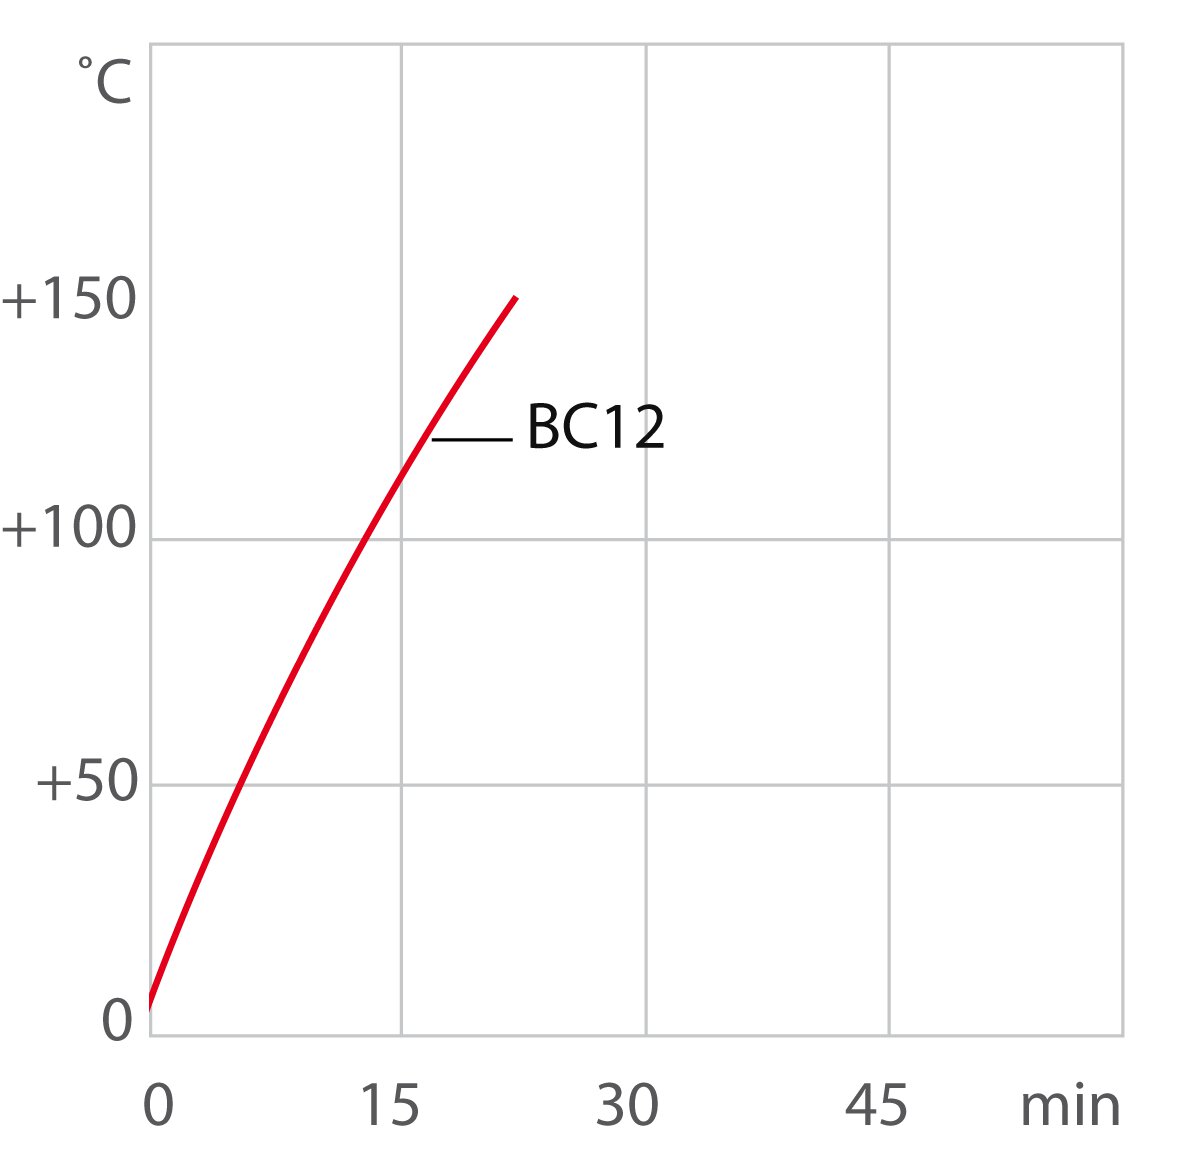 Heating curve Heating circulator BC12 from JULABO